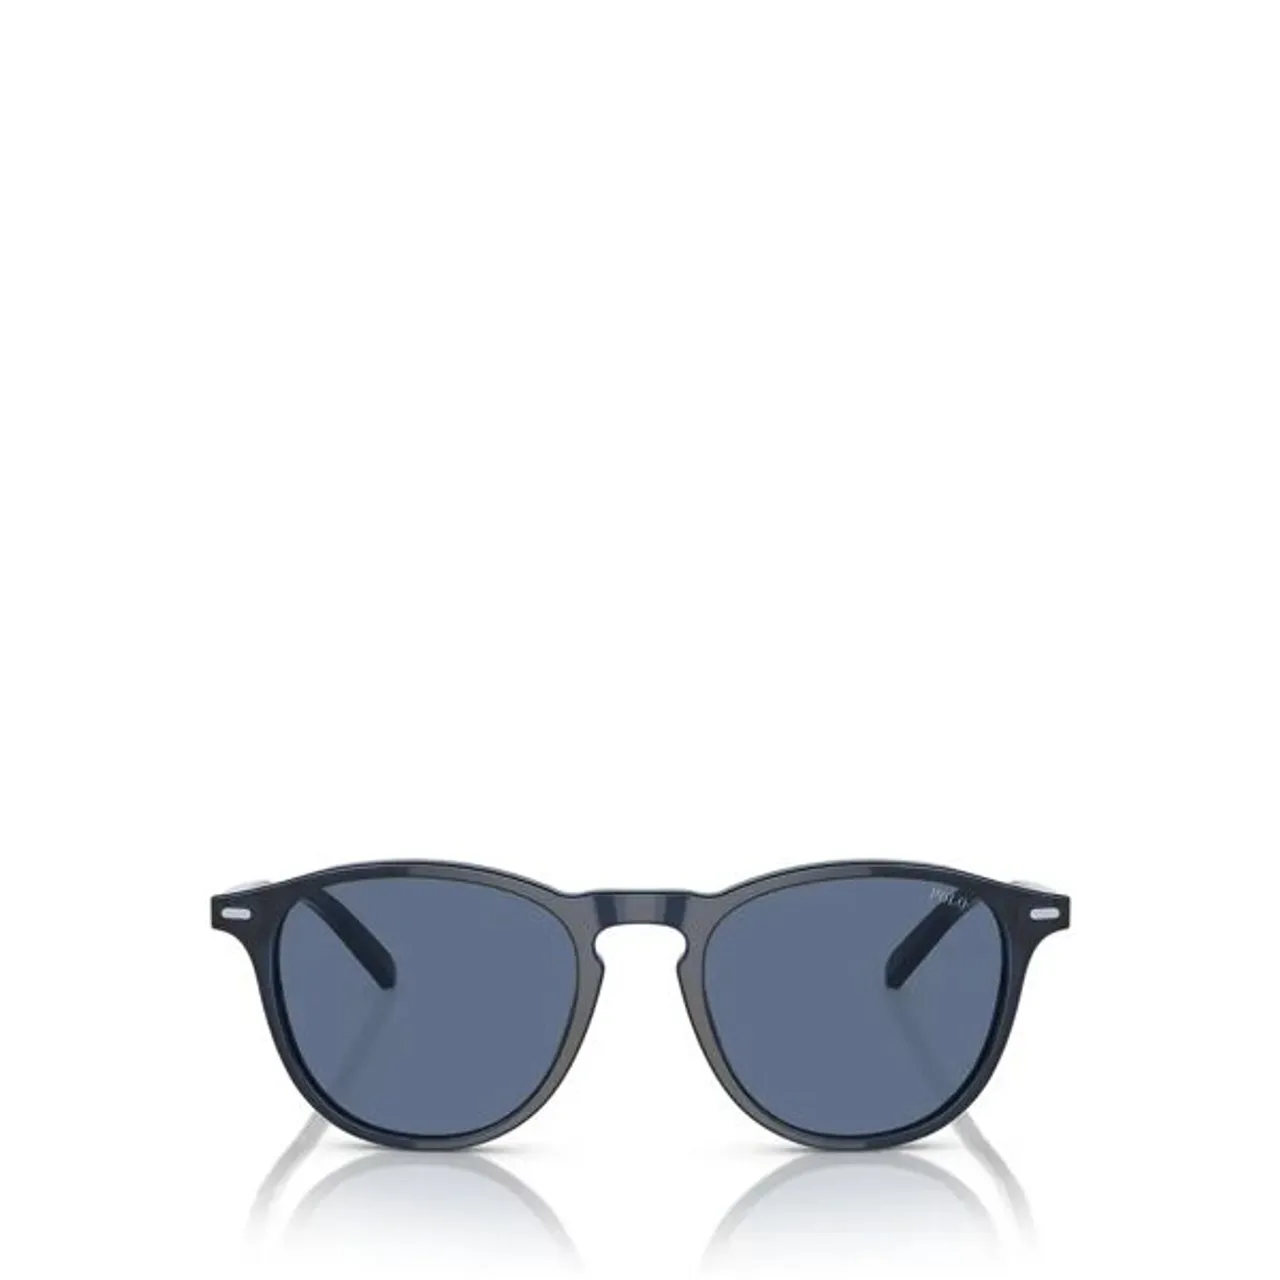 Ralph Lauren PH4181 Men's Phantos Sunglasses - Blue/Navy - Male